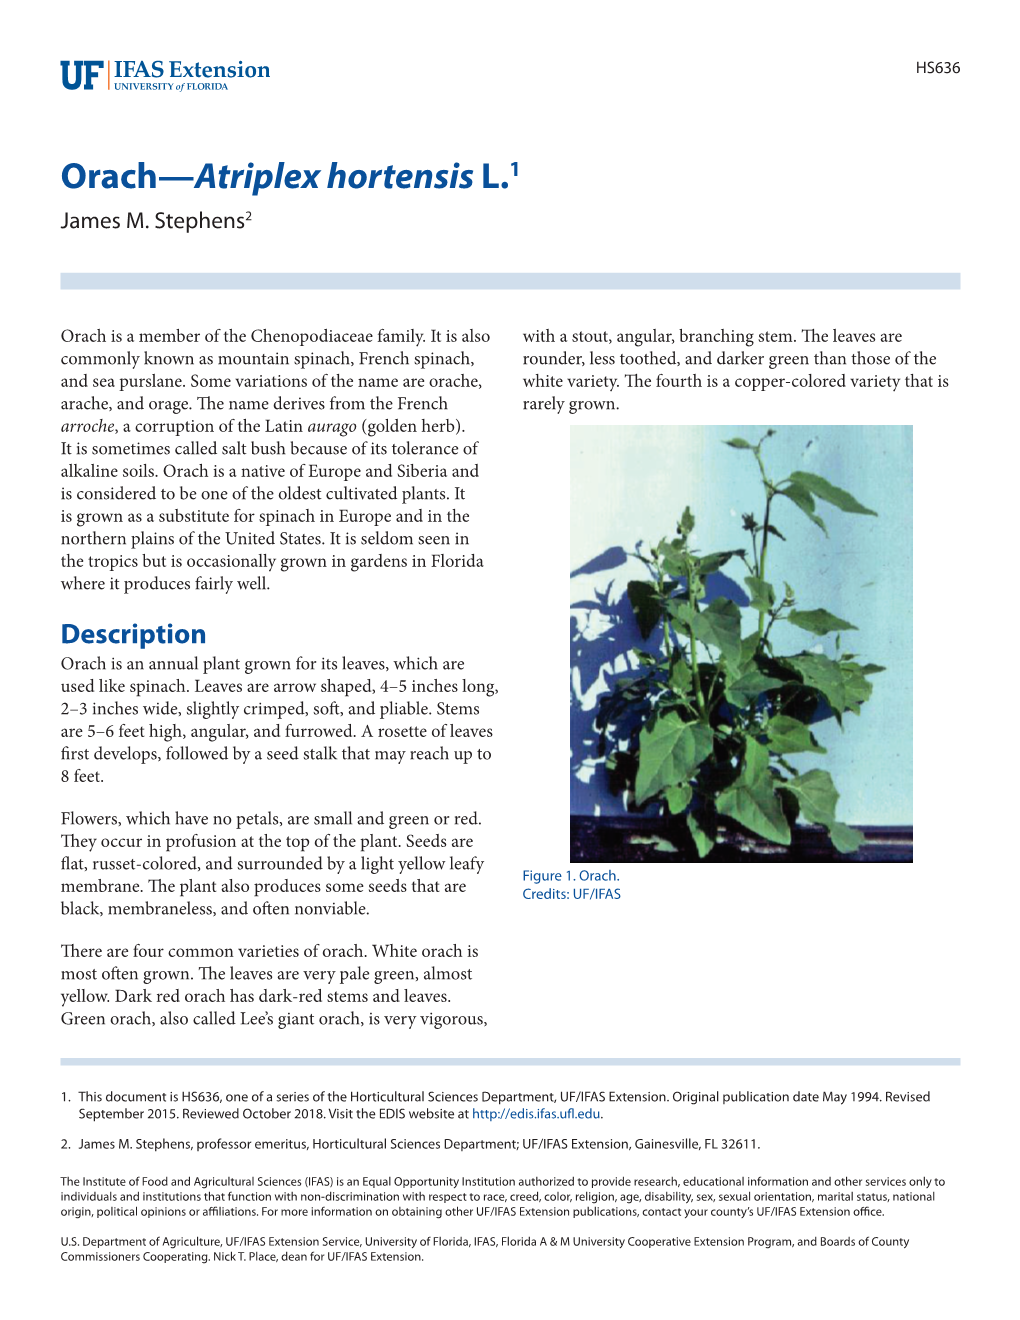 Orach—Atriplex Hortensis L.1 James M